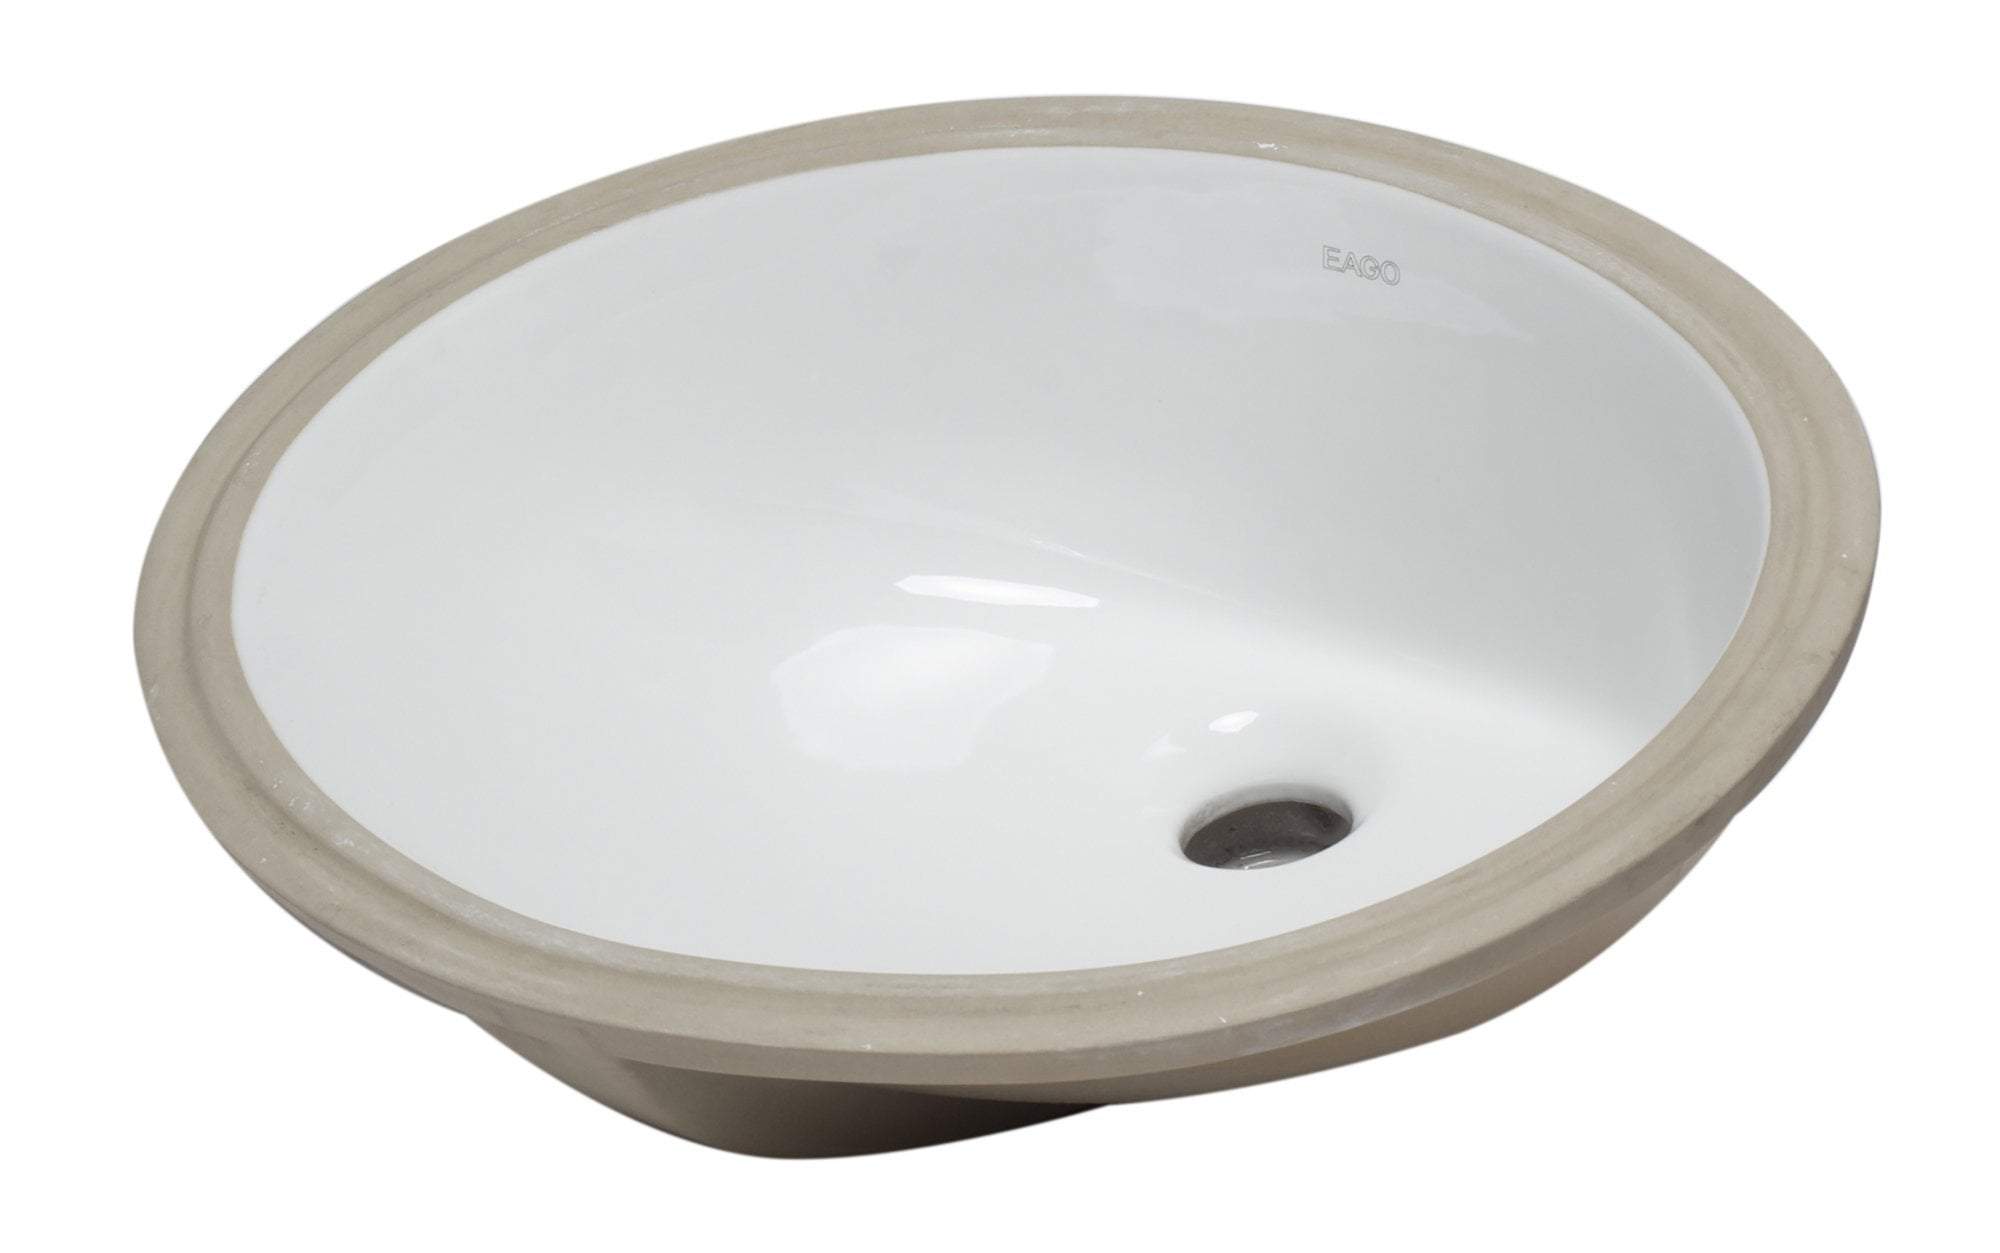 White Ceramic 18"x15" Undermount Oval Bathroom Sink